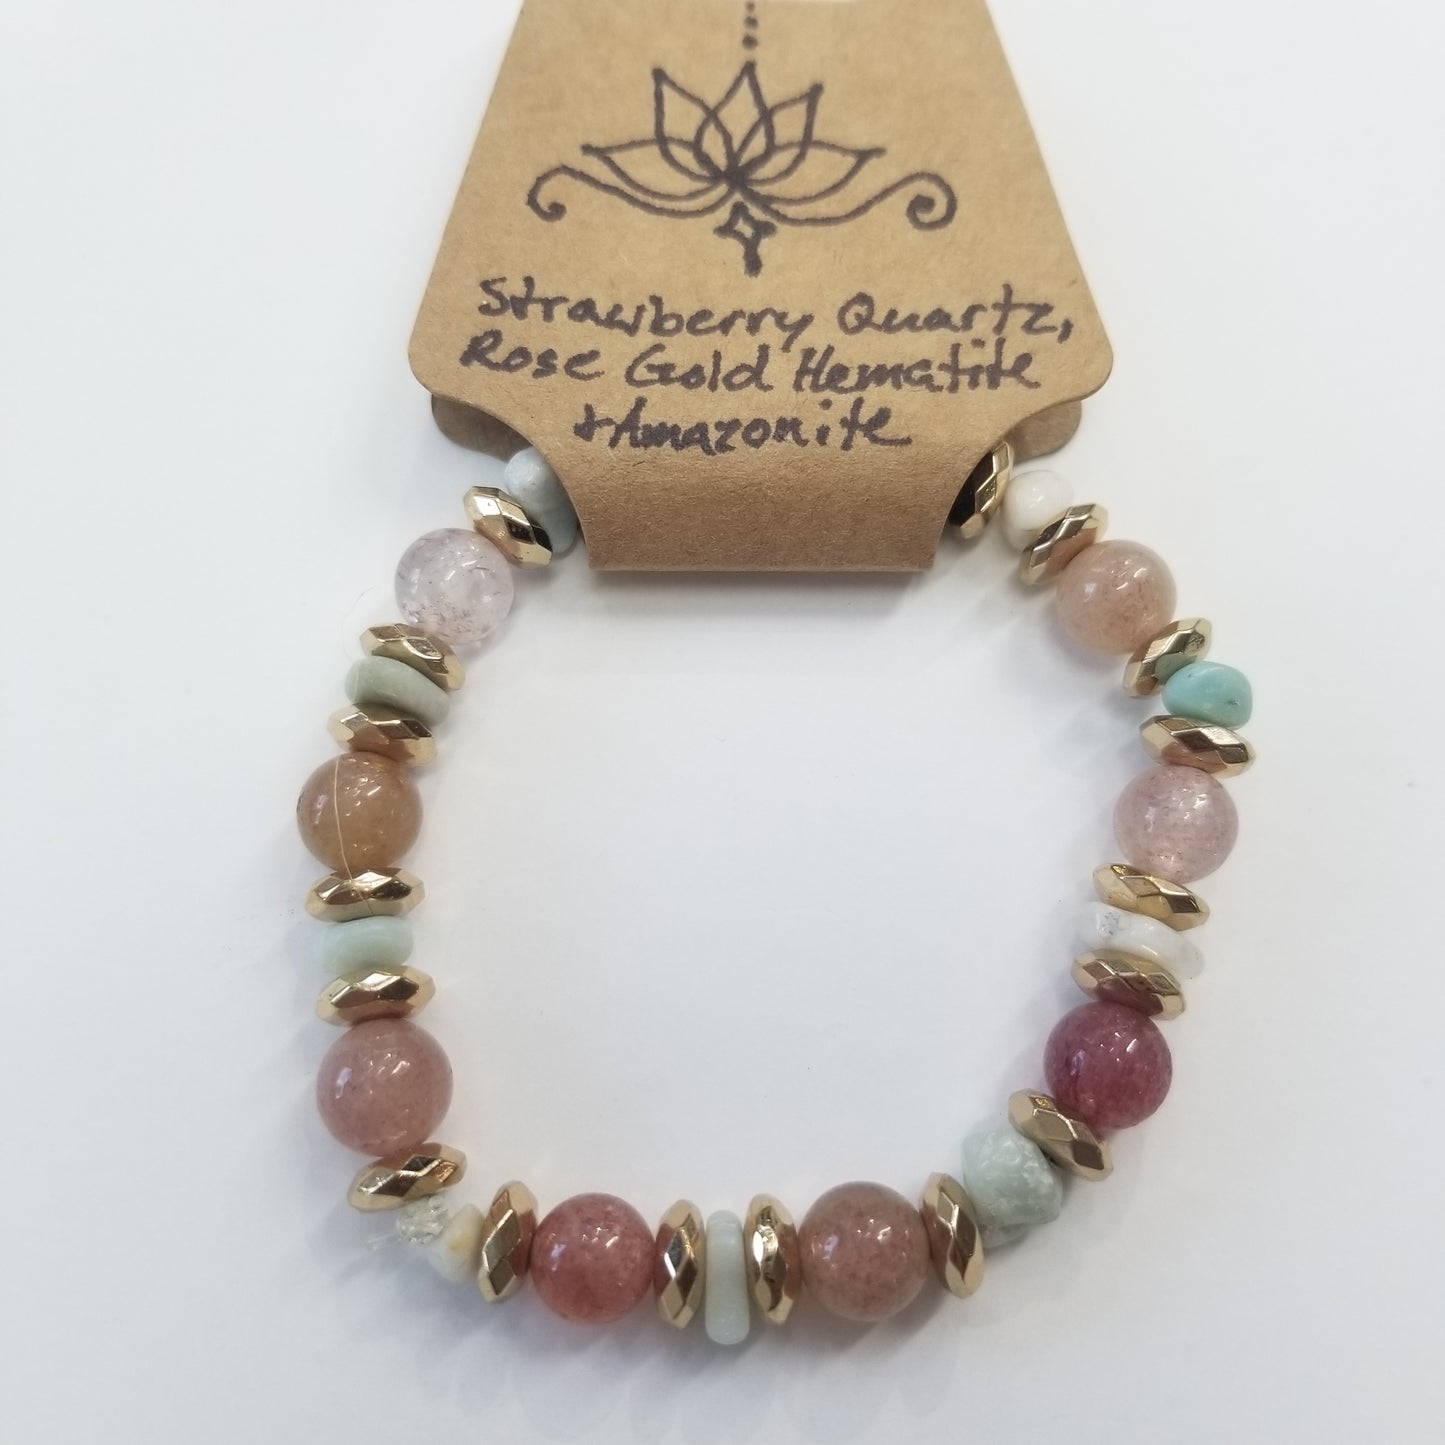 Strawberry Quartz, Rose Gold Hematite & Amazonite